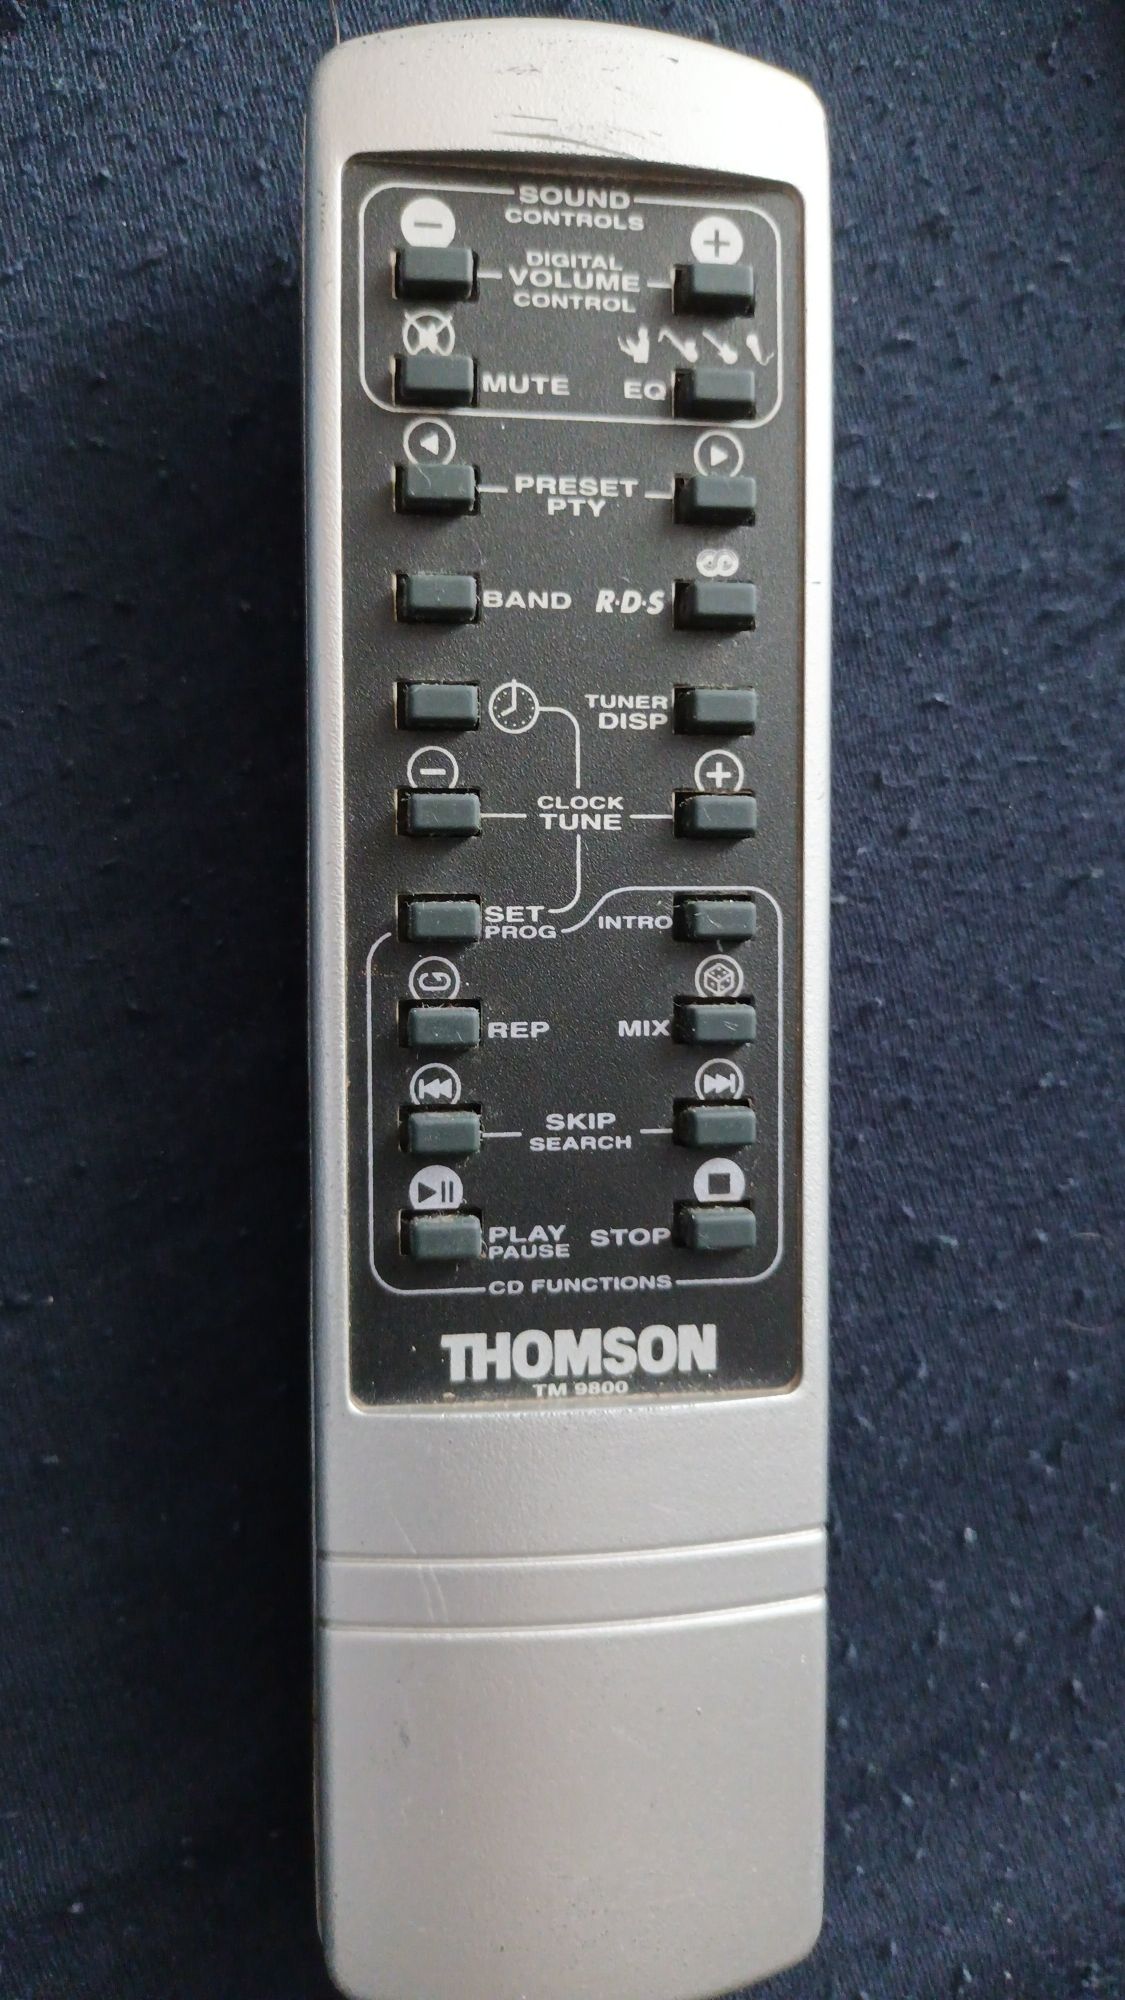 Pilot Thompson TM 9800